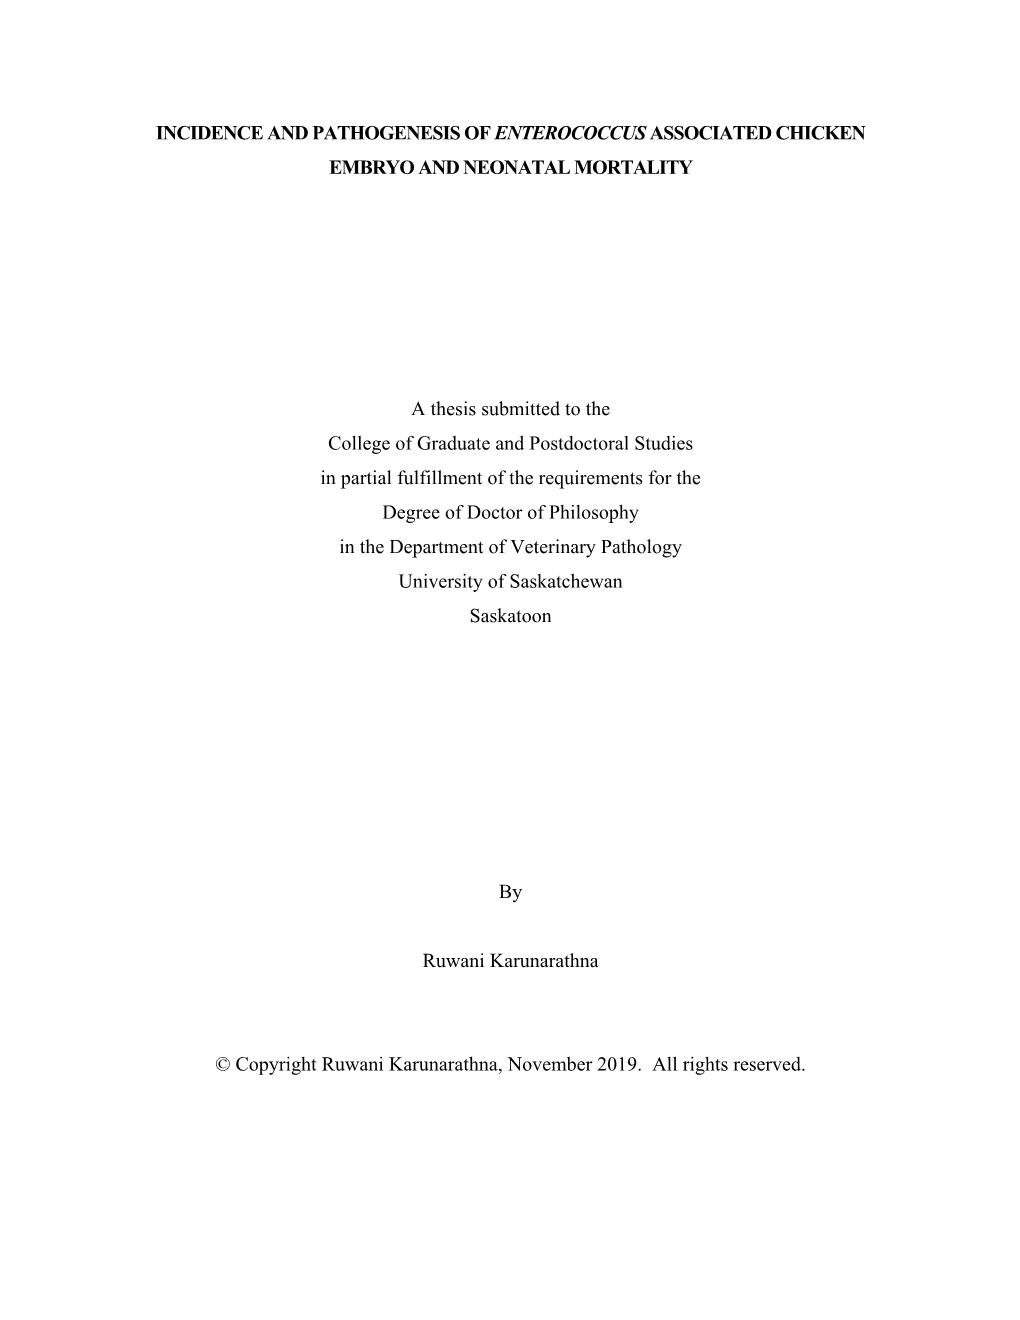 Karunarathna-Dissertation